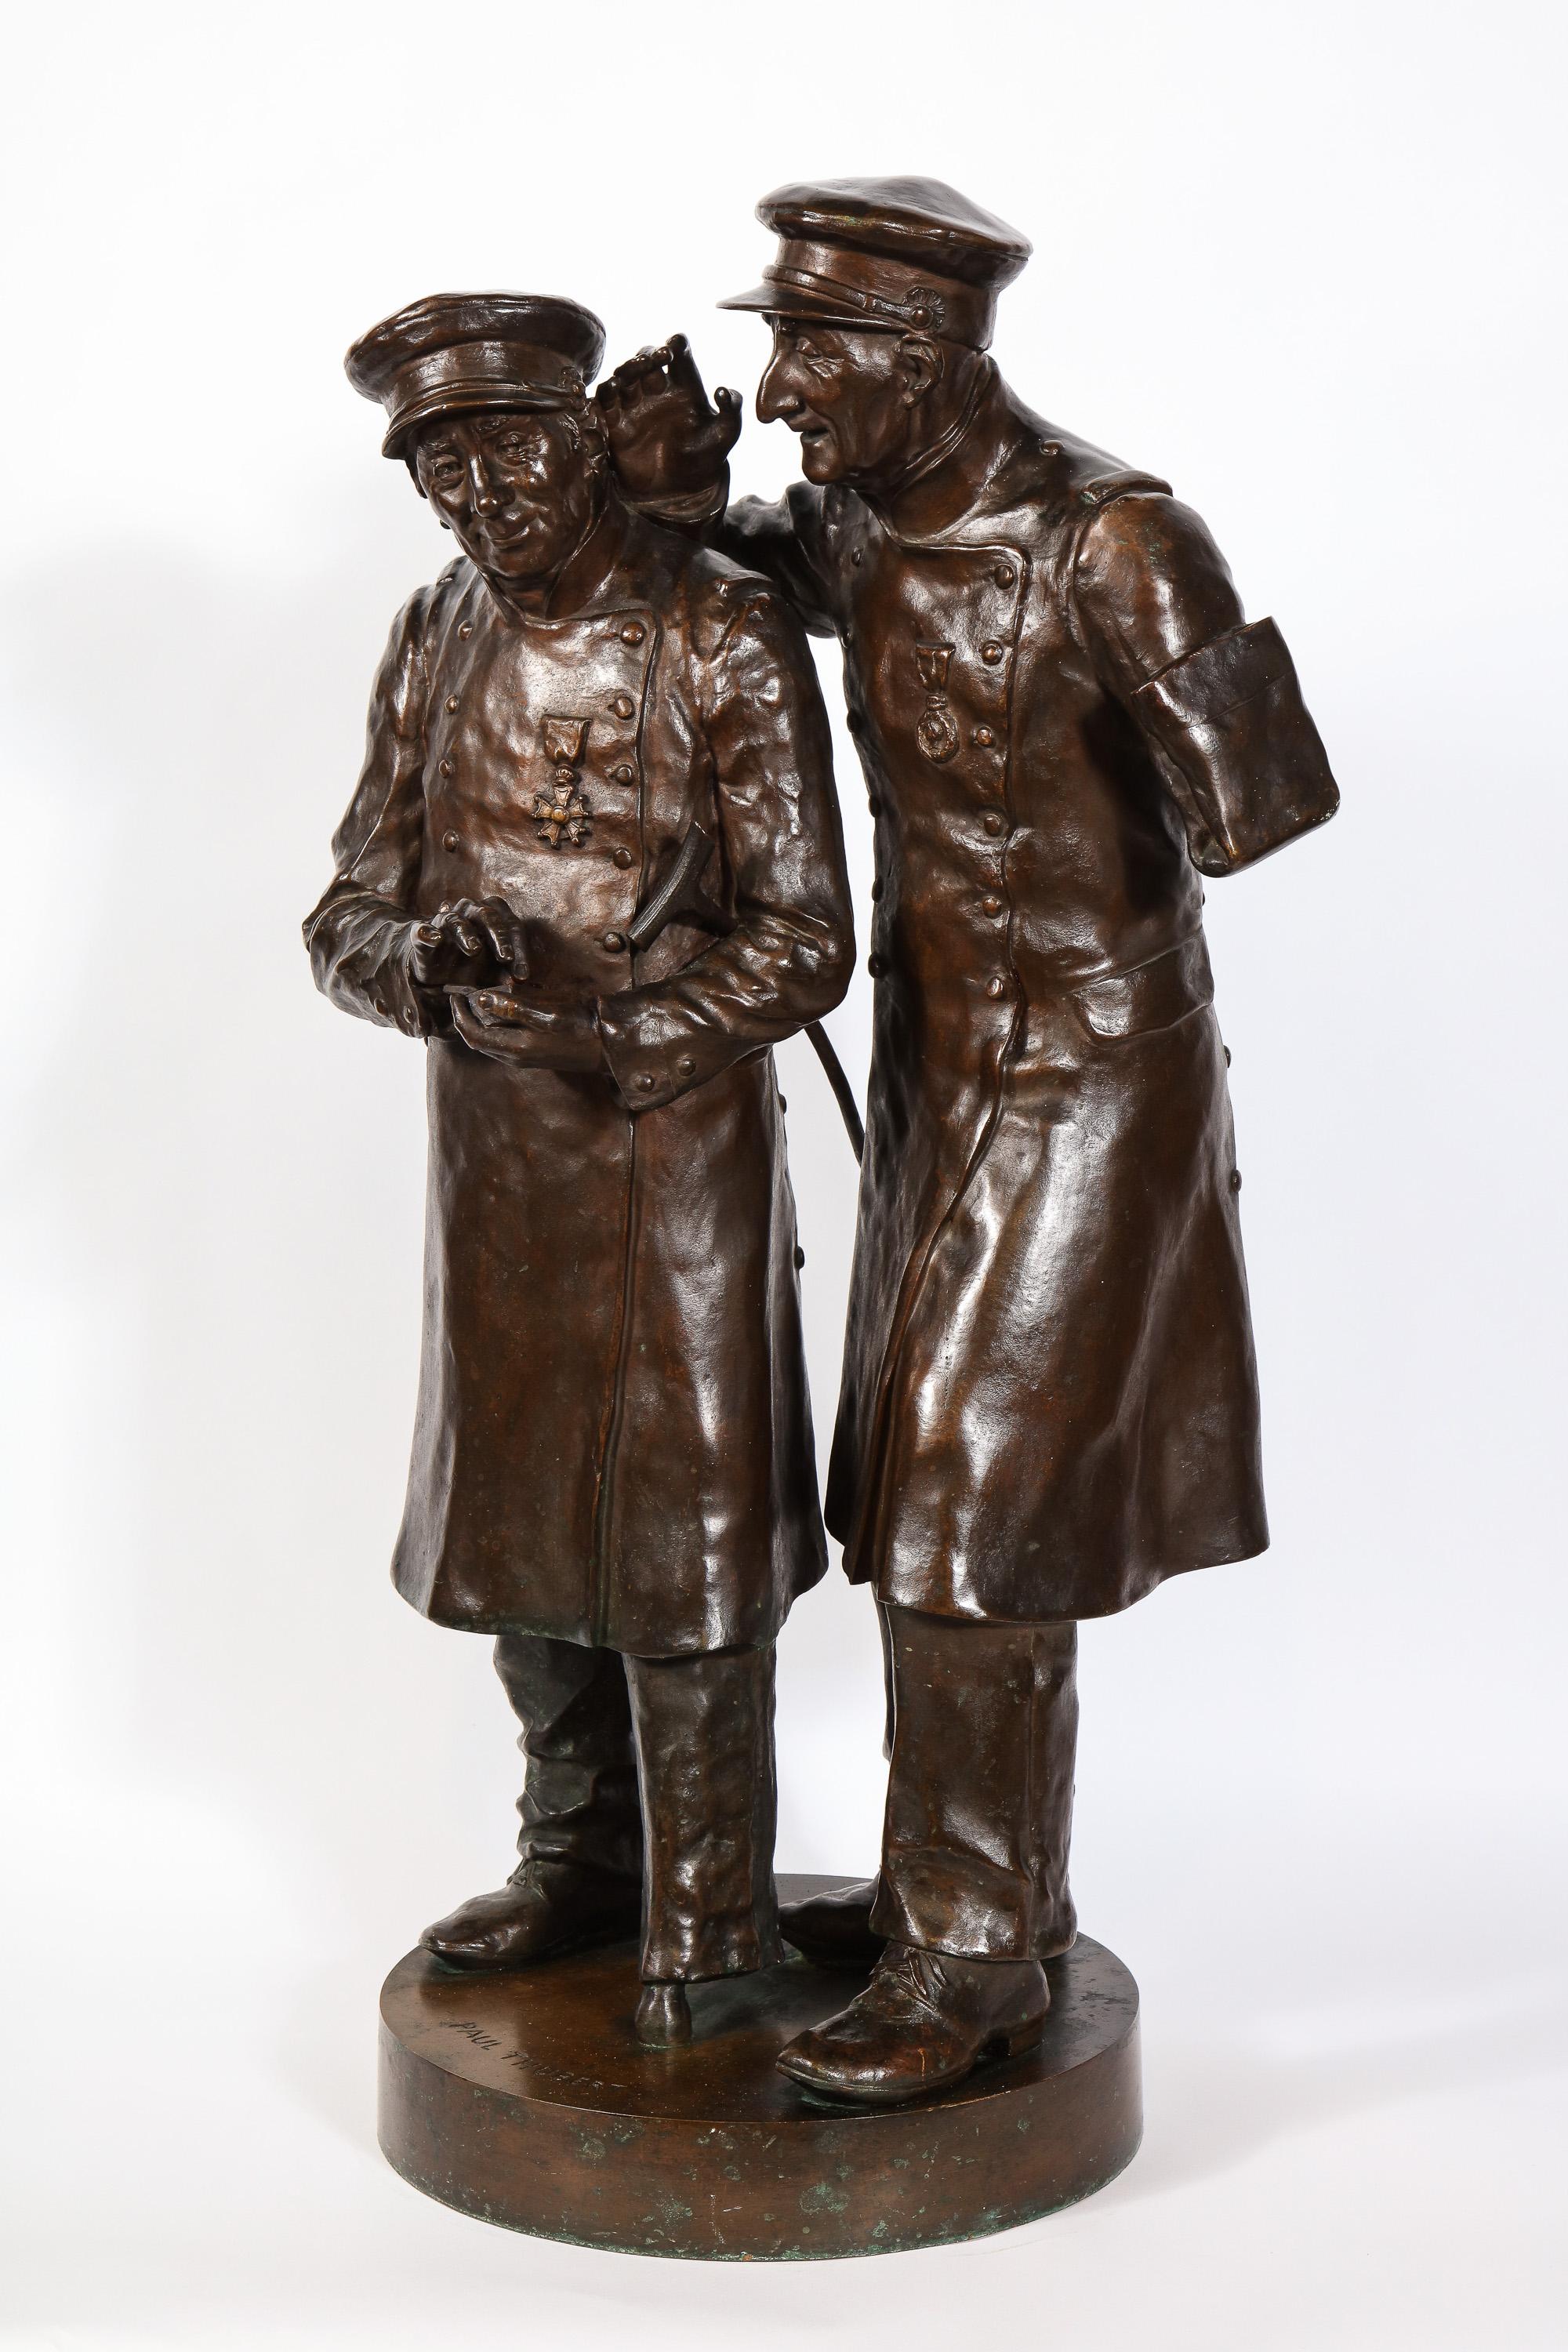 Paul Thubert 'English, 19th Century' a Large Bronze Sculpture of War Veterans For Sale 8